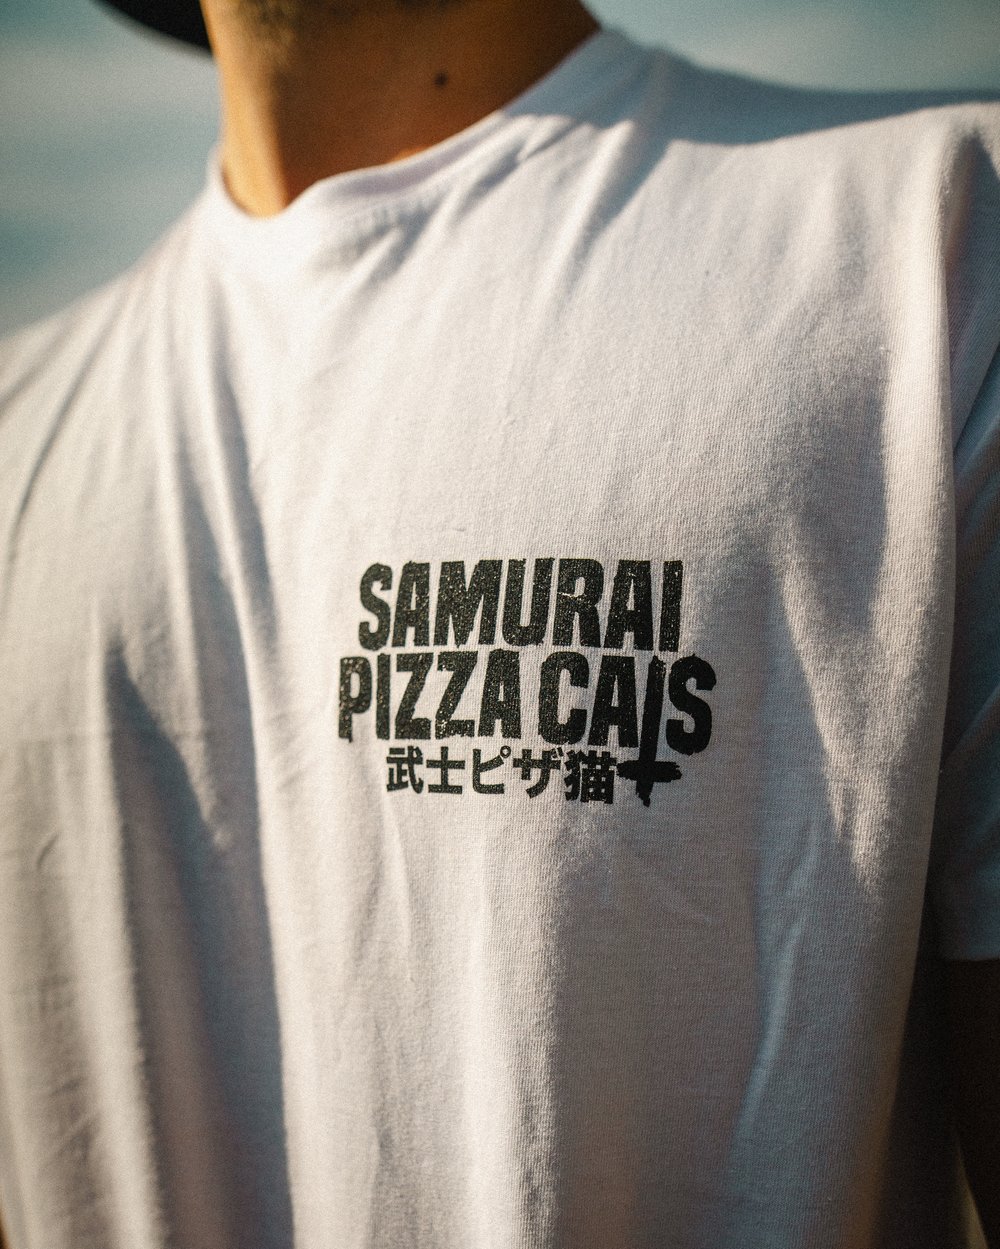 "SAMURAI PIZZA CATS" Shirt